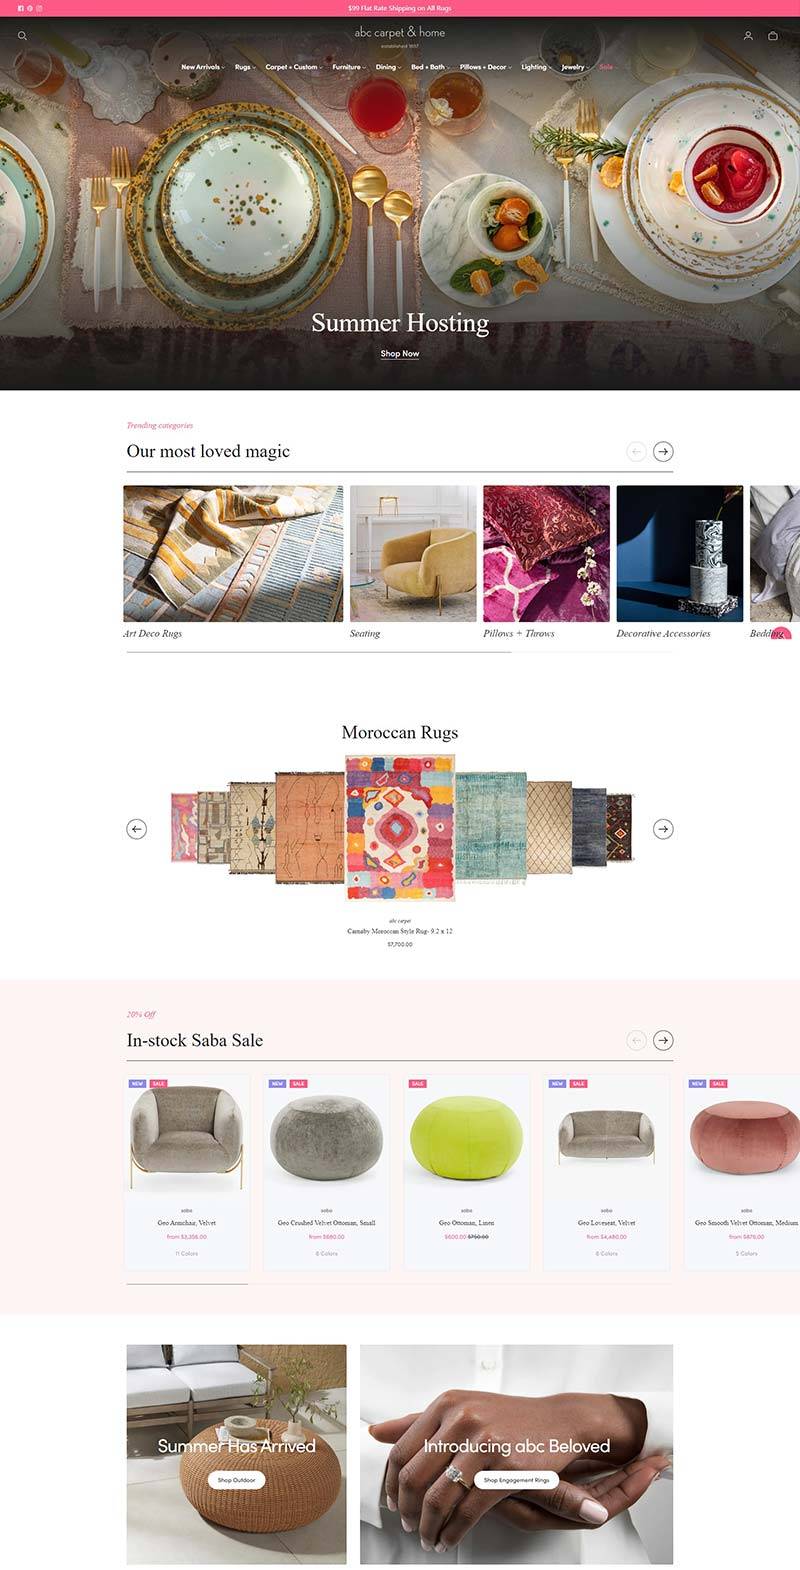 ABC Carpet & Home 美国室内家居装饰购物网站